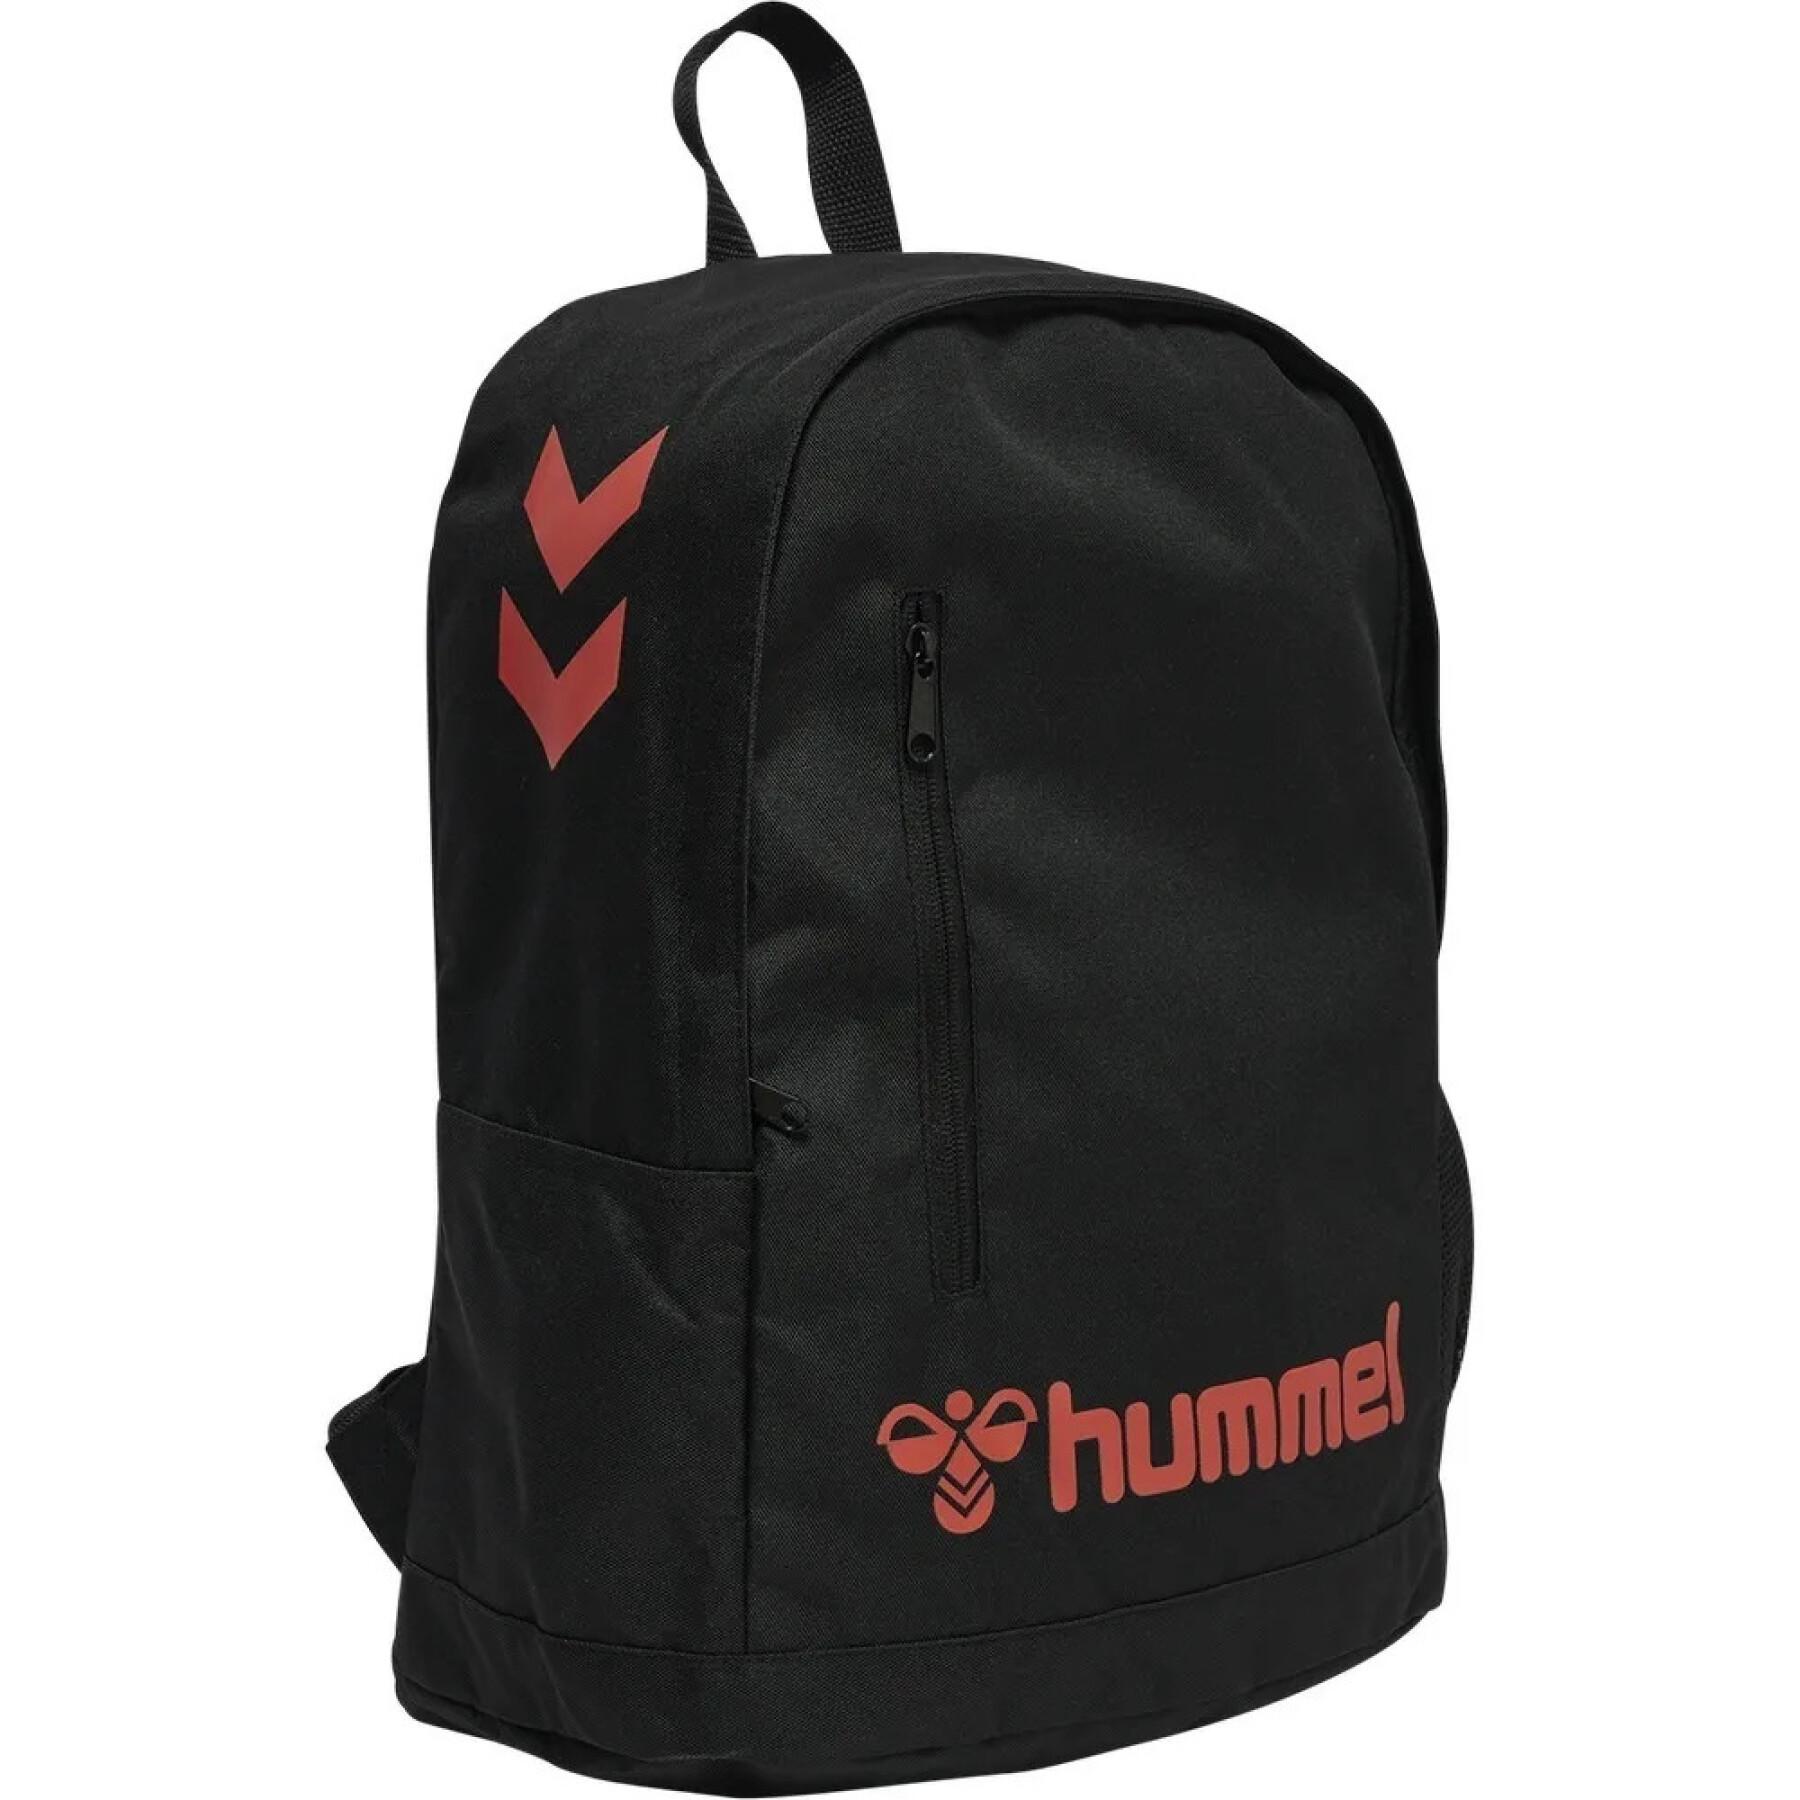 fee elk Trouw Backpack Hummel - Backpacks - Bags - Equipment